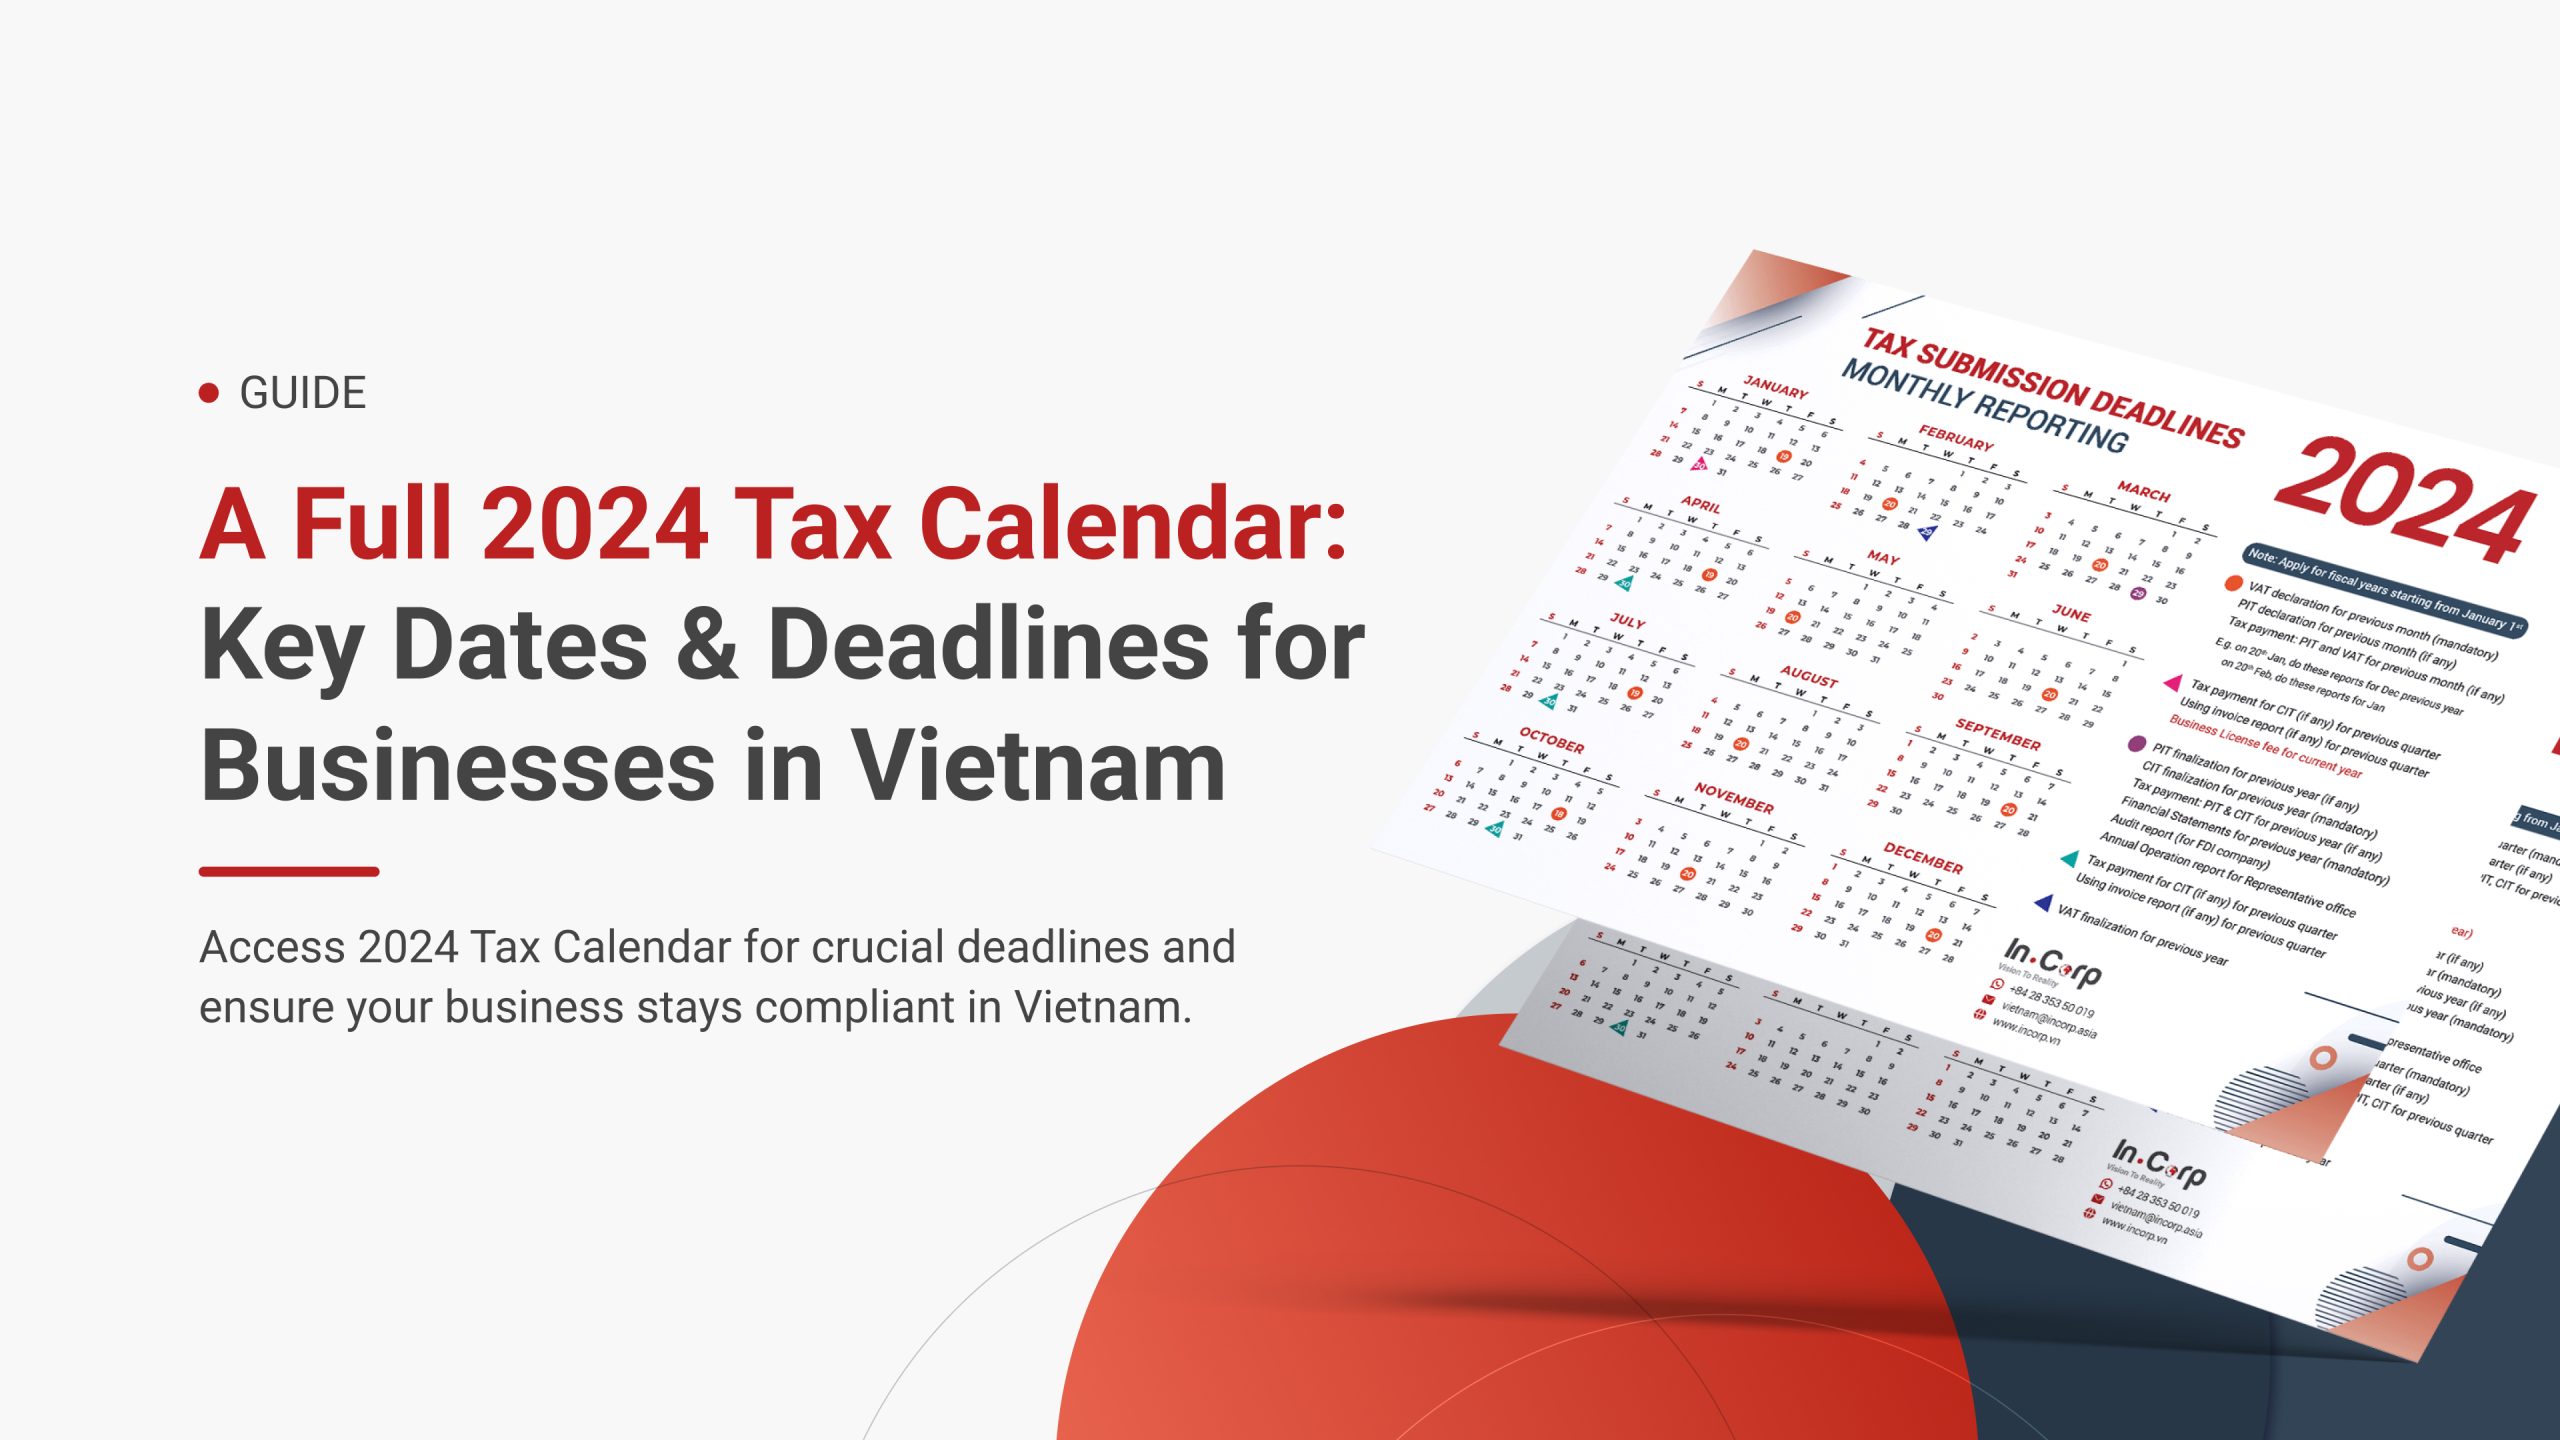 A Full 2024 Tax Calendar: Key Dates & Deadlines for Businesses in Vietnam